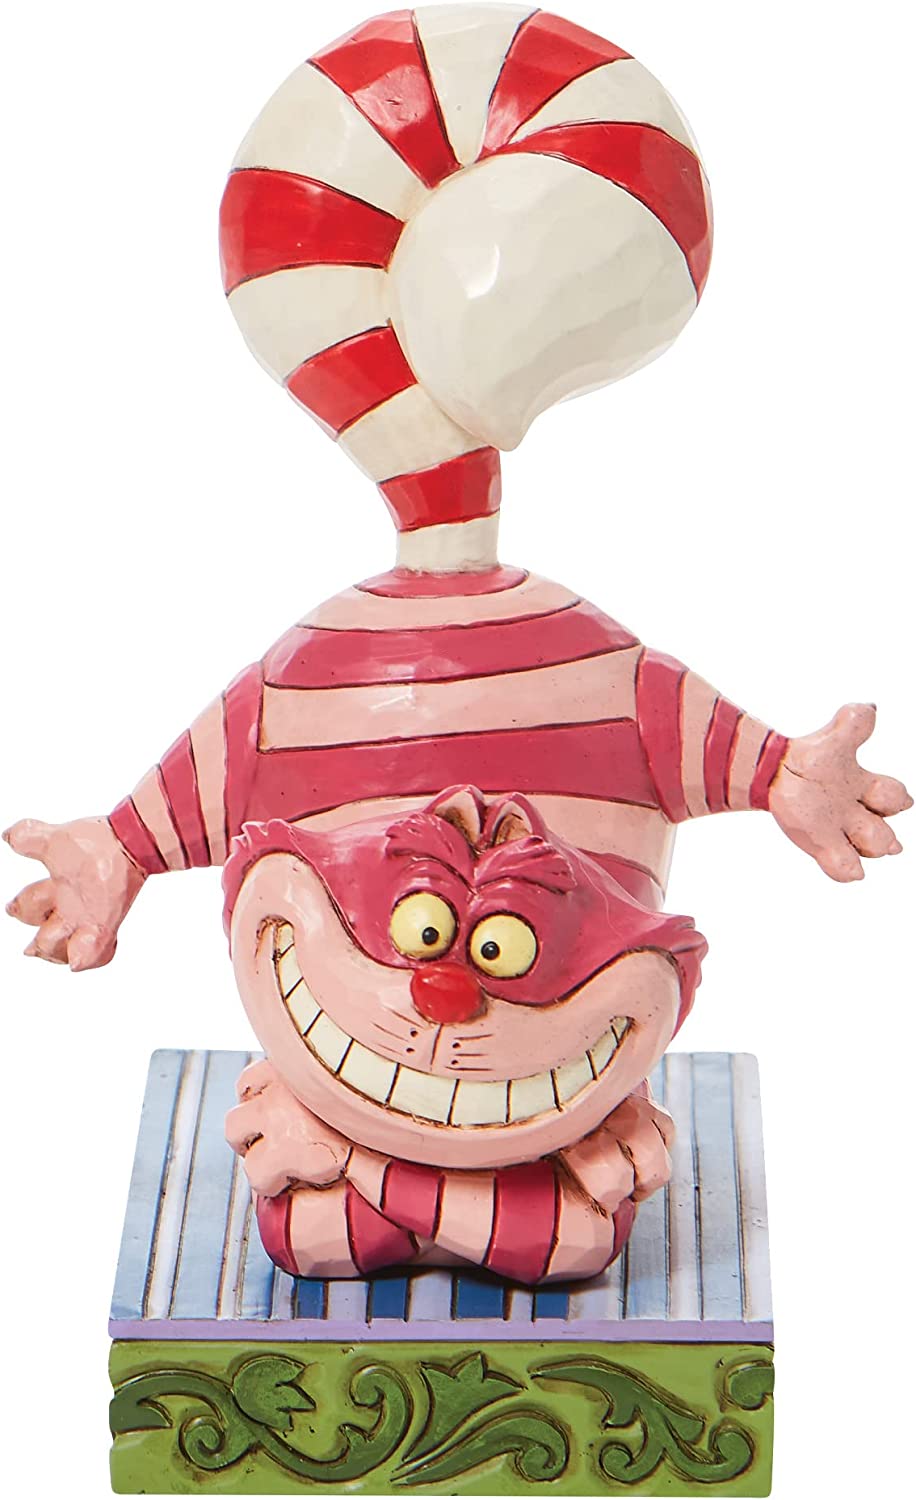 Grinsekatze-Cheshire-Cat-Figur-Disney-by-Jim-Shore-berlindeluxe-katze-pink